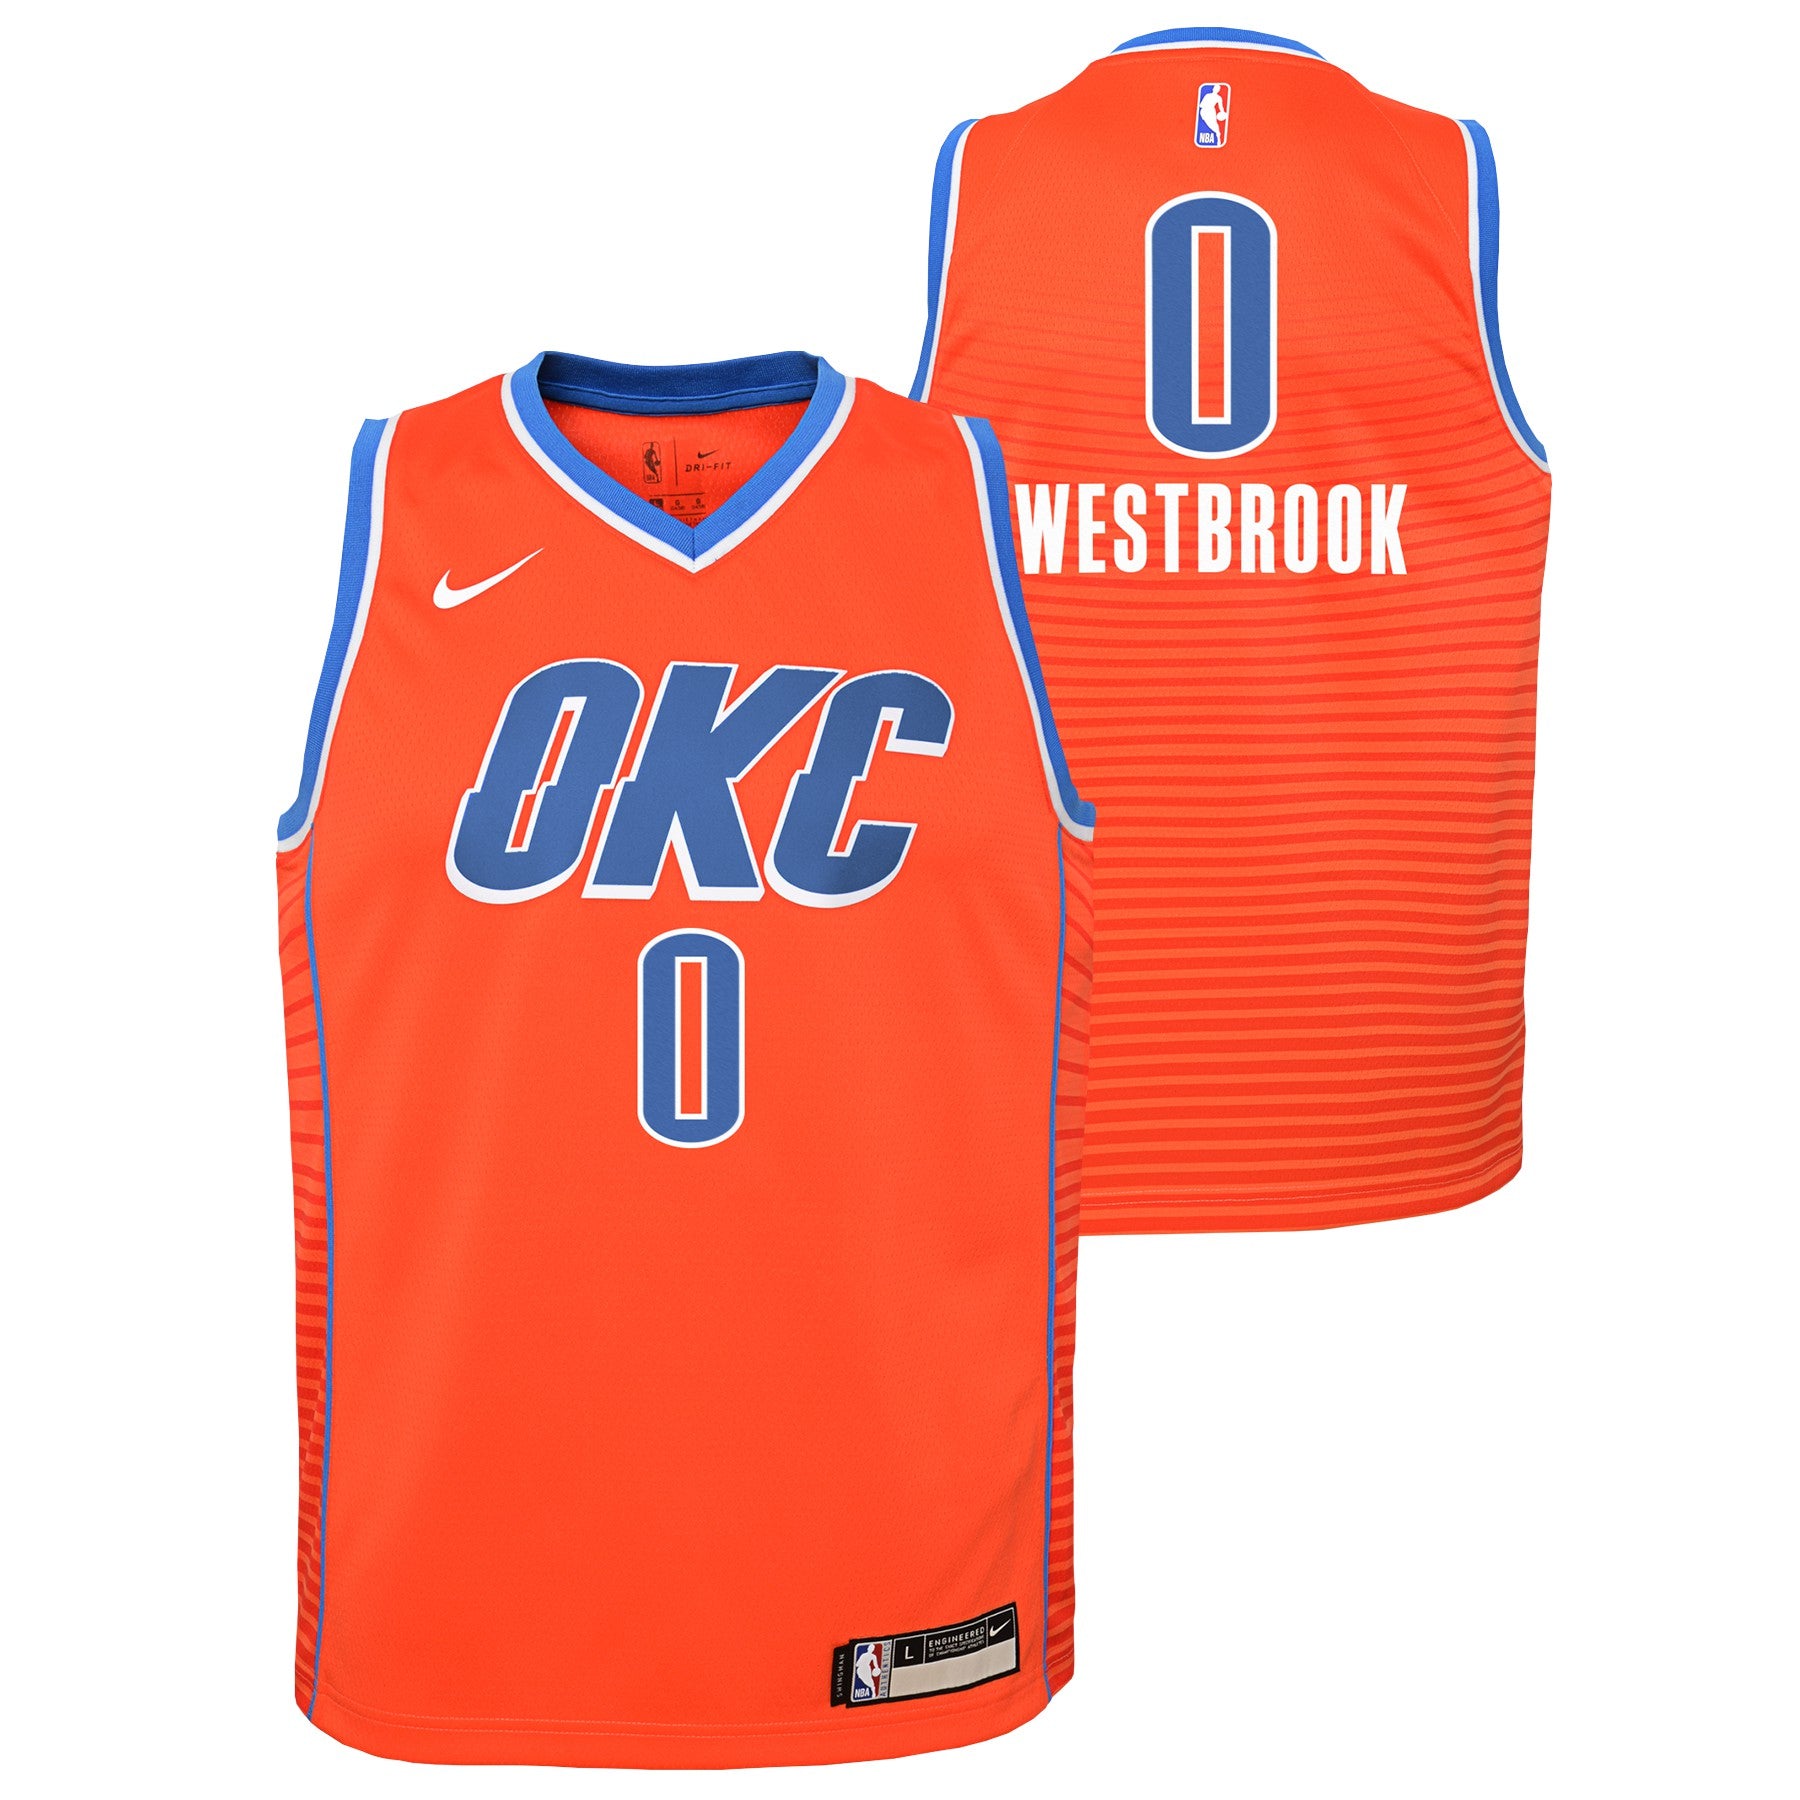 Order your Oklahoma City Thunder City Edition gear now